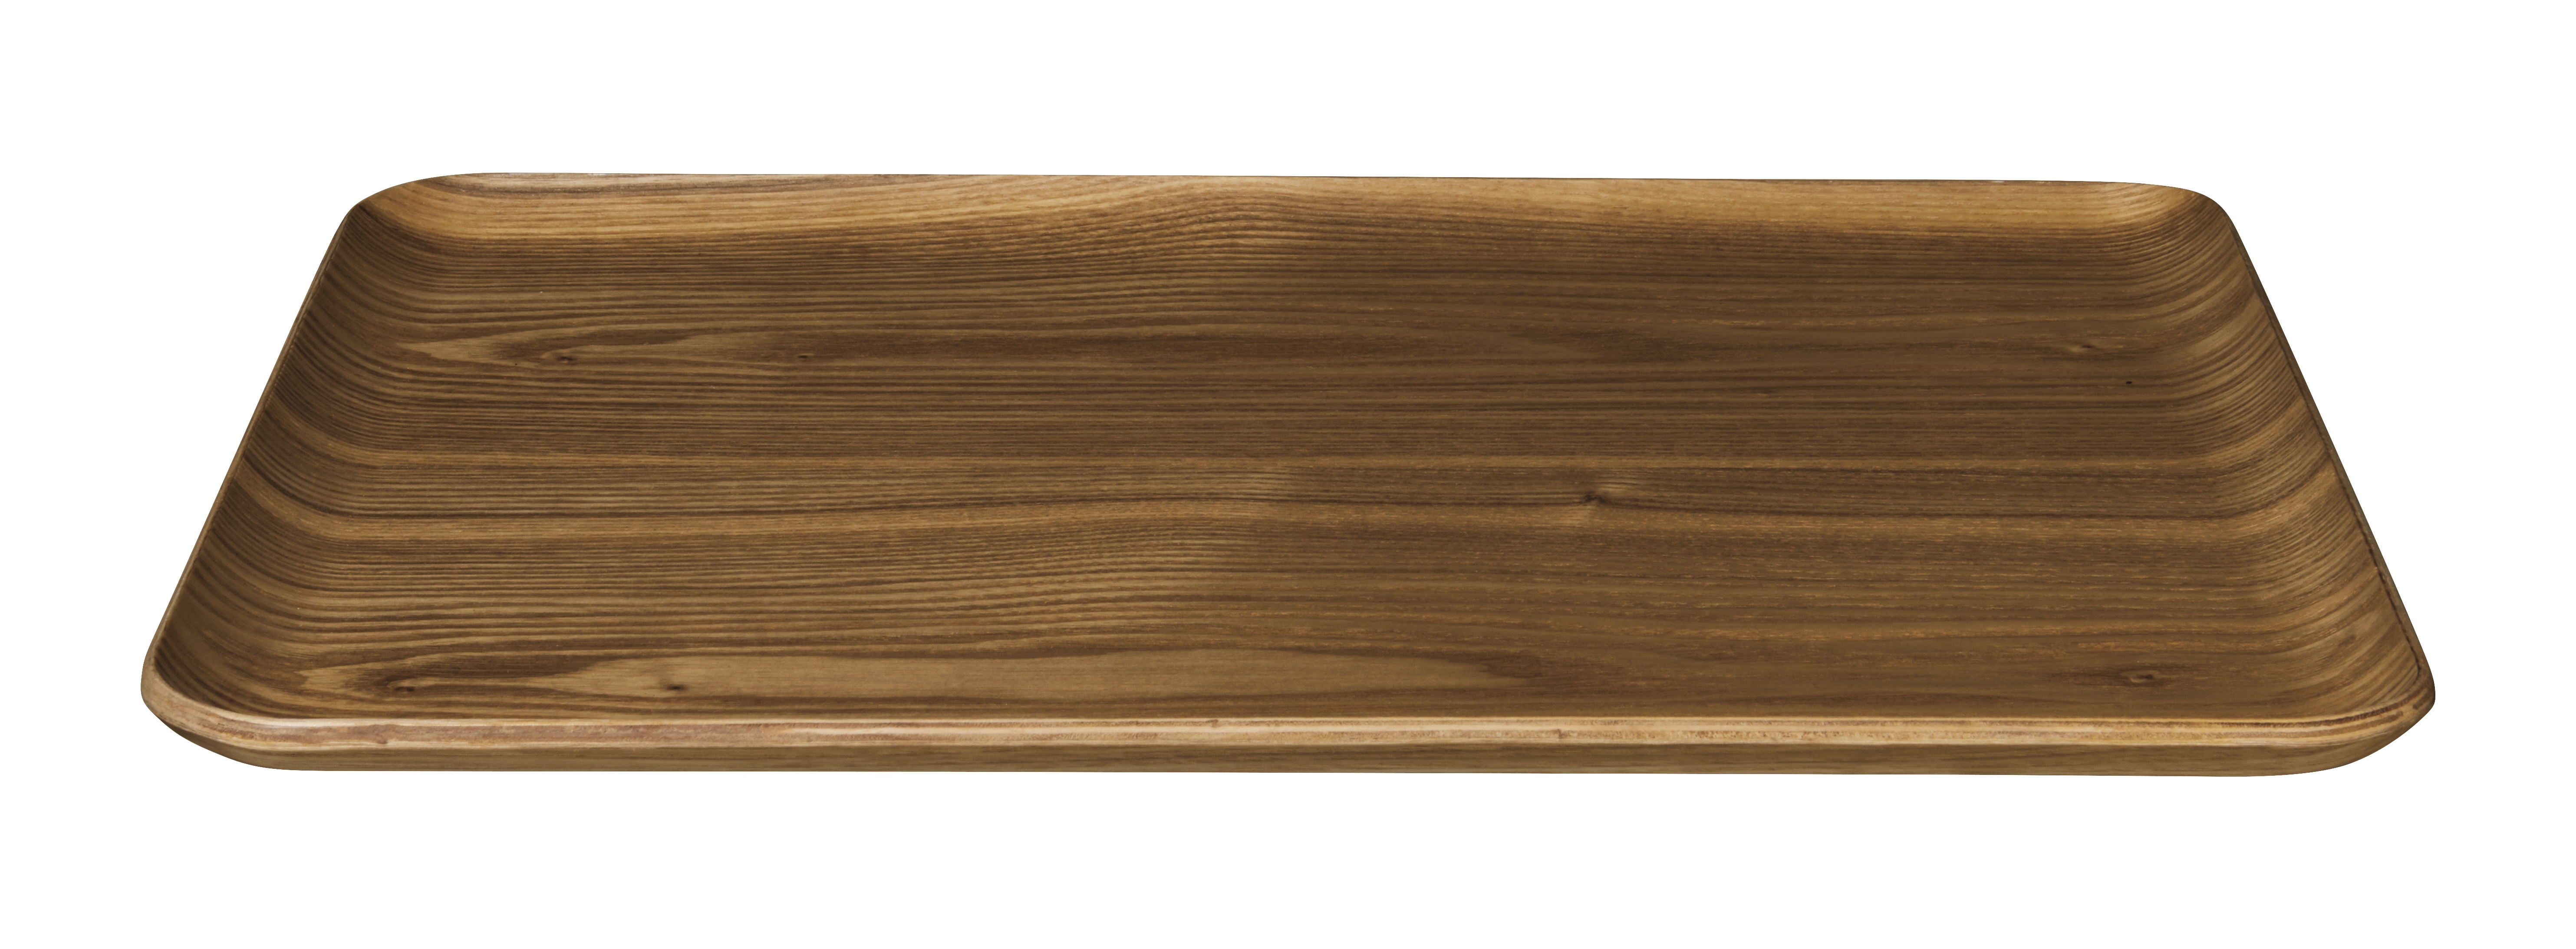 Holztablett, Wood rechteckig, 36x28cm